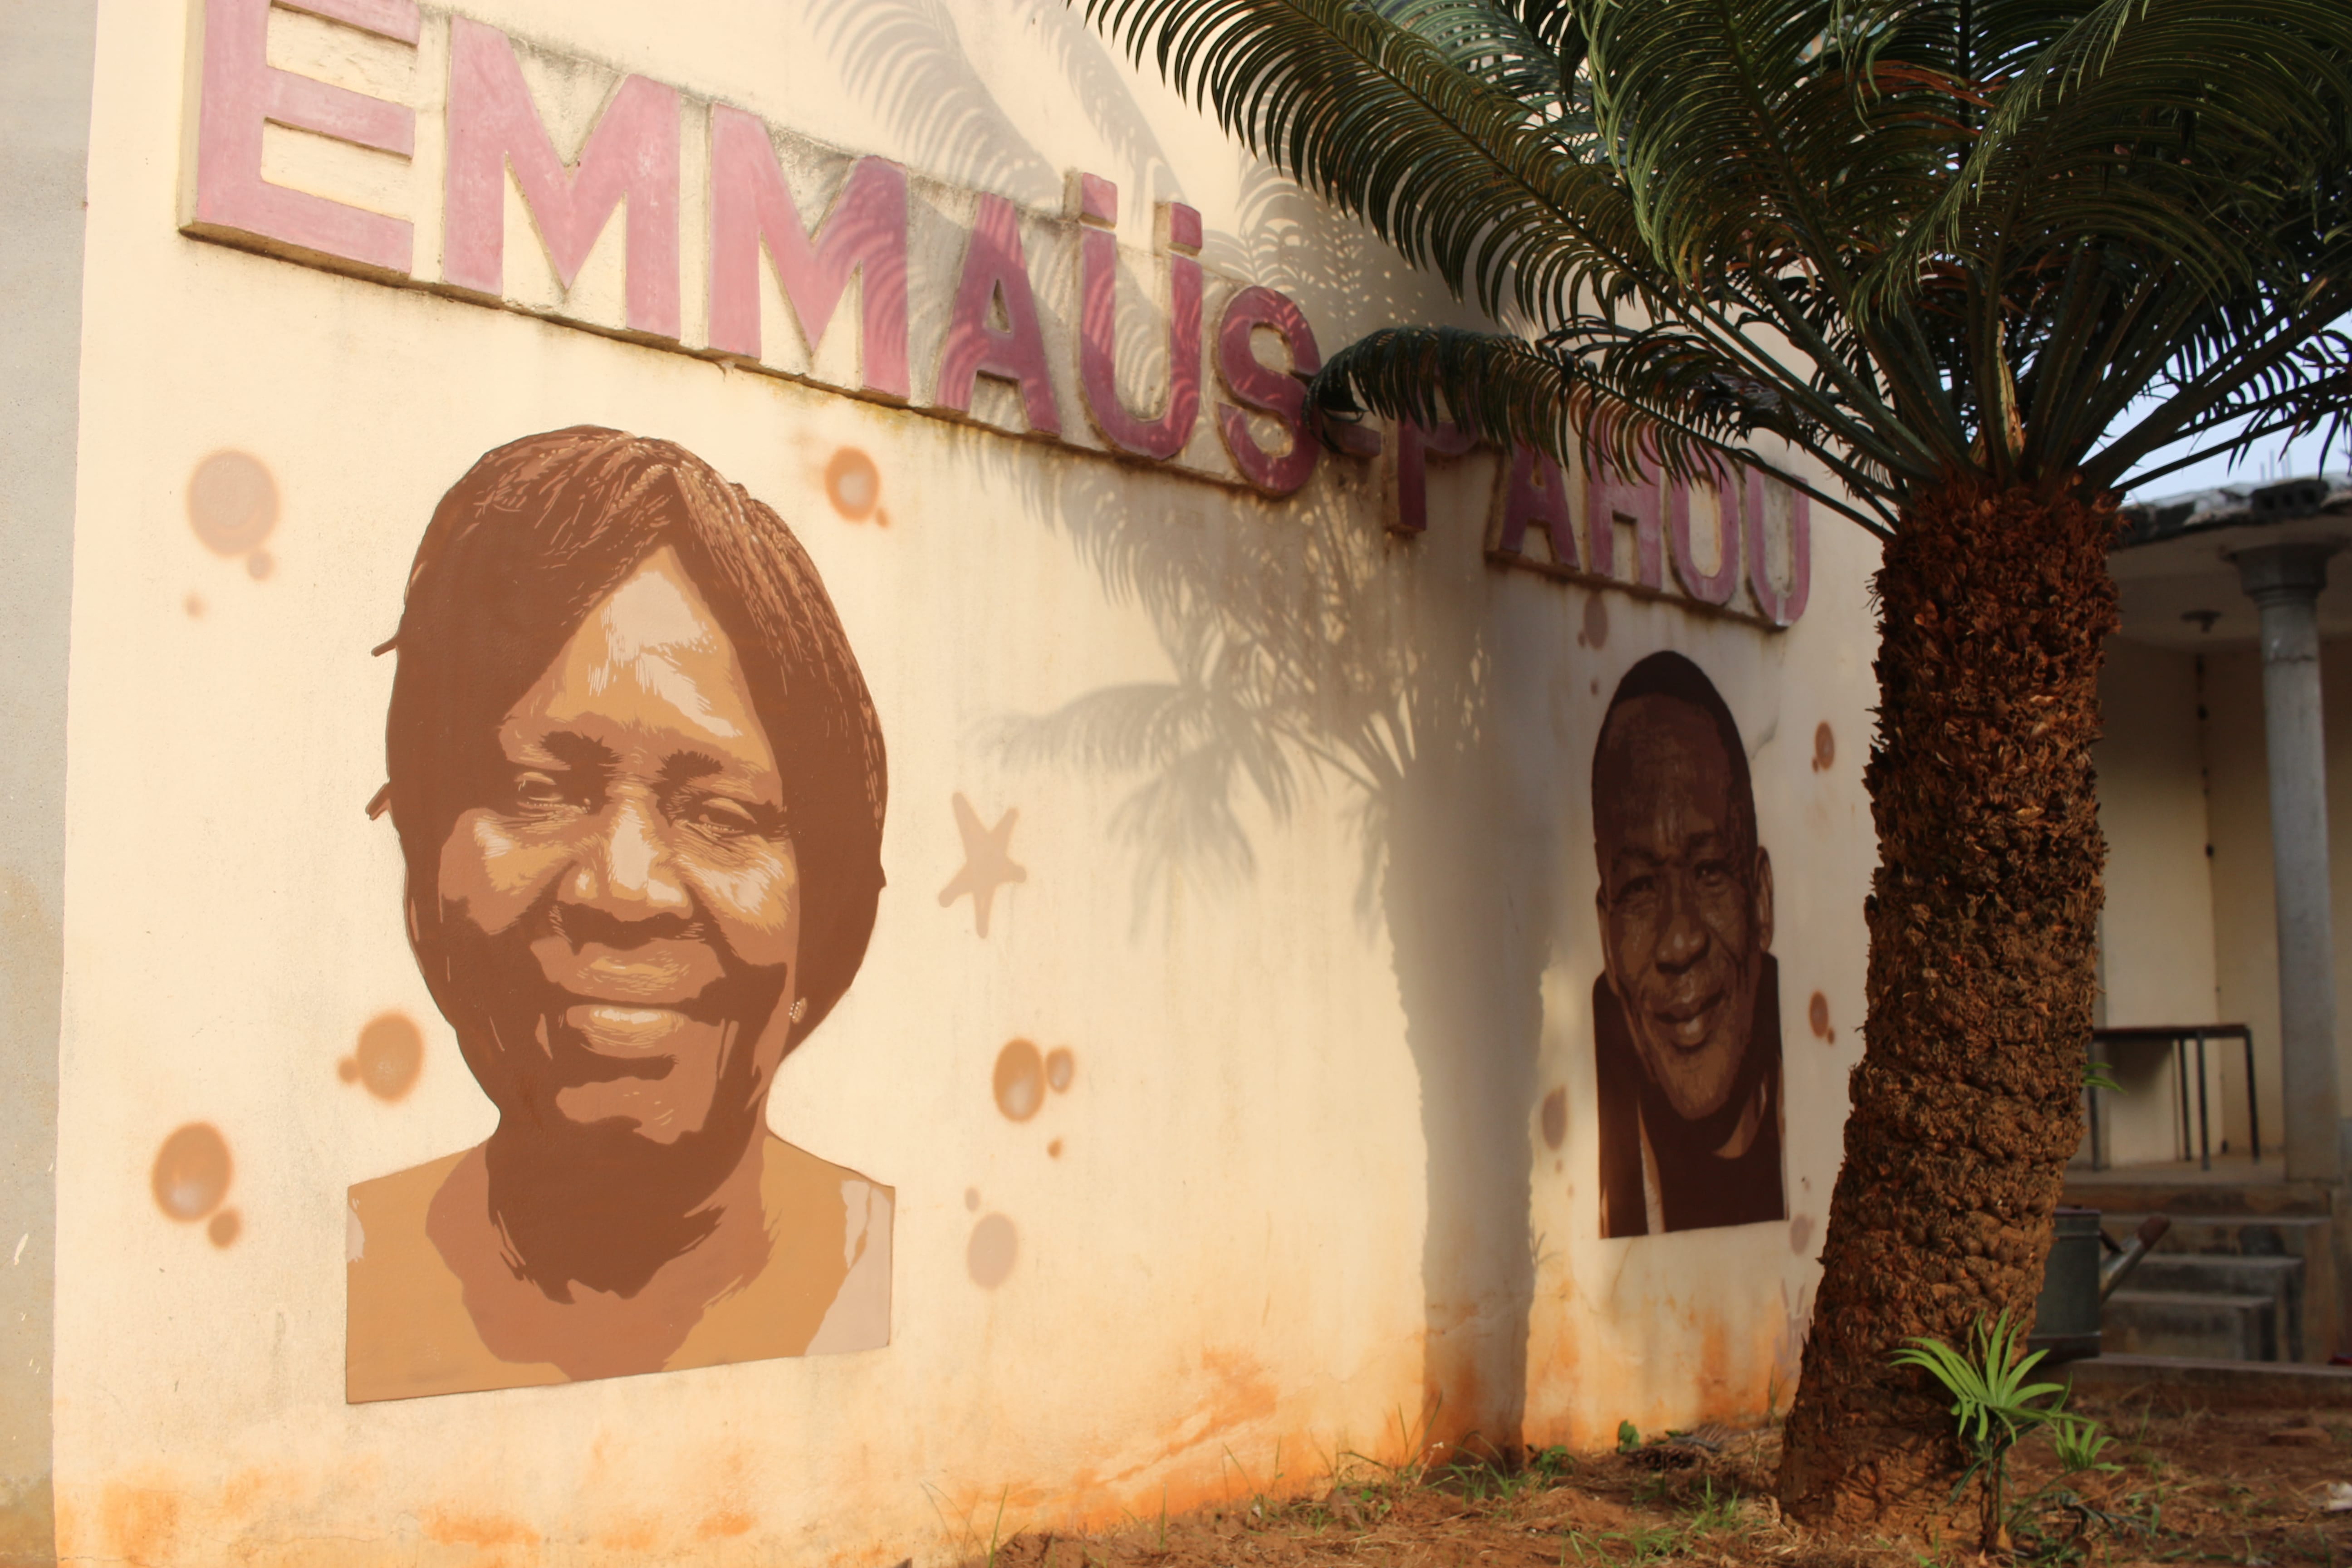 Graffiti 4645 Emmaüs by the artist Jinks Kunst captured by Jinks Kunst in Godomey Benin